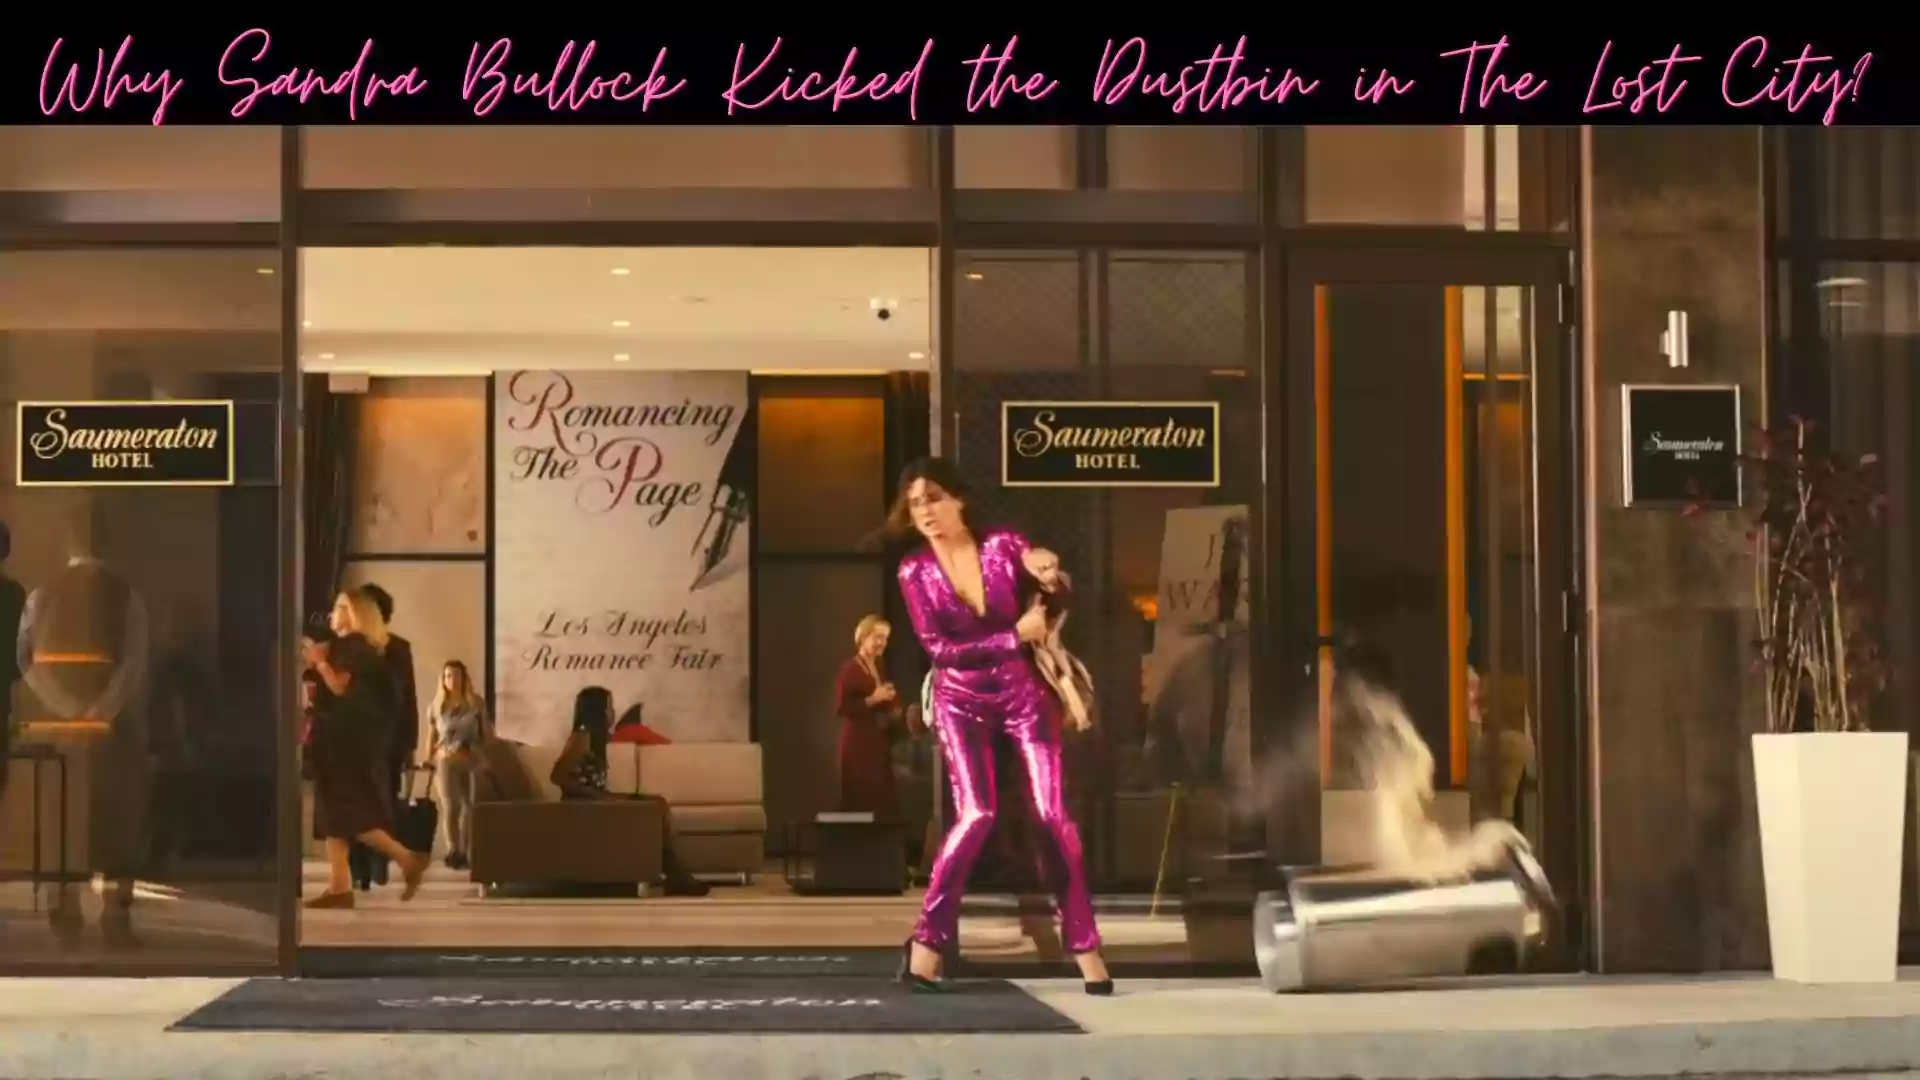 Why Sandra Bullock Kicked the Dustbin in The Lost City